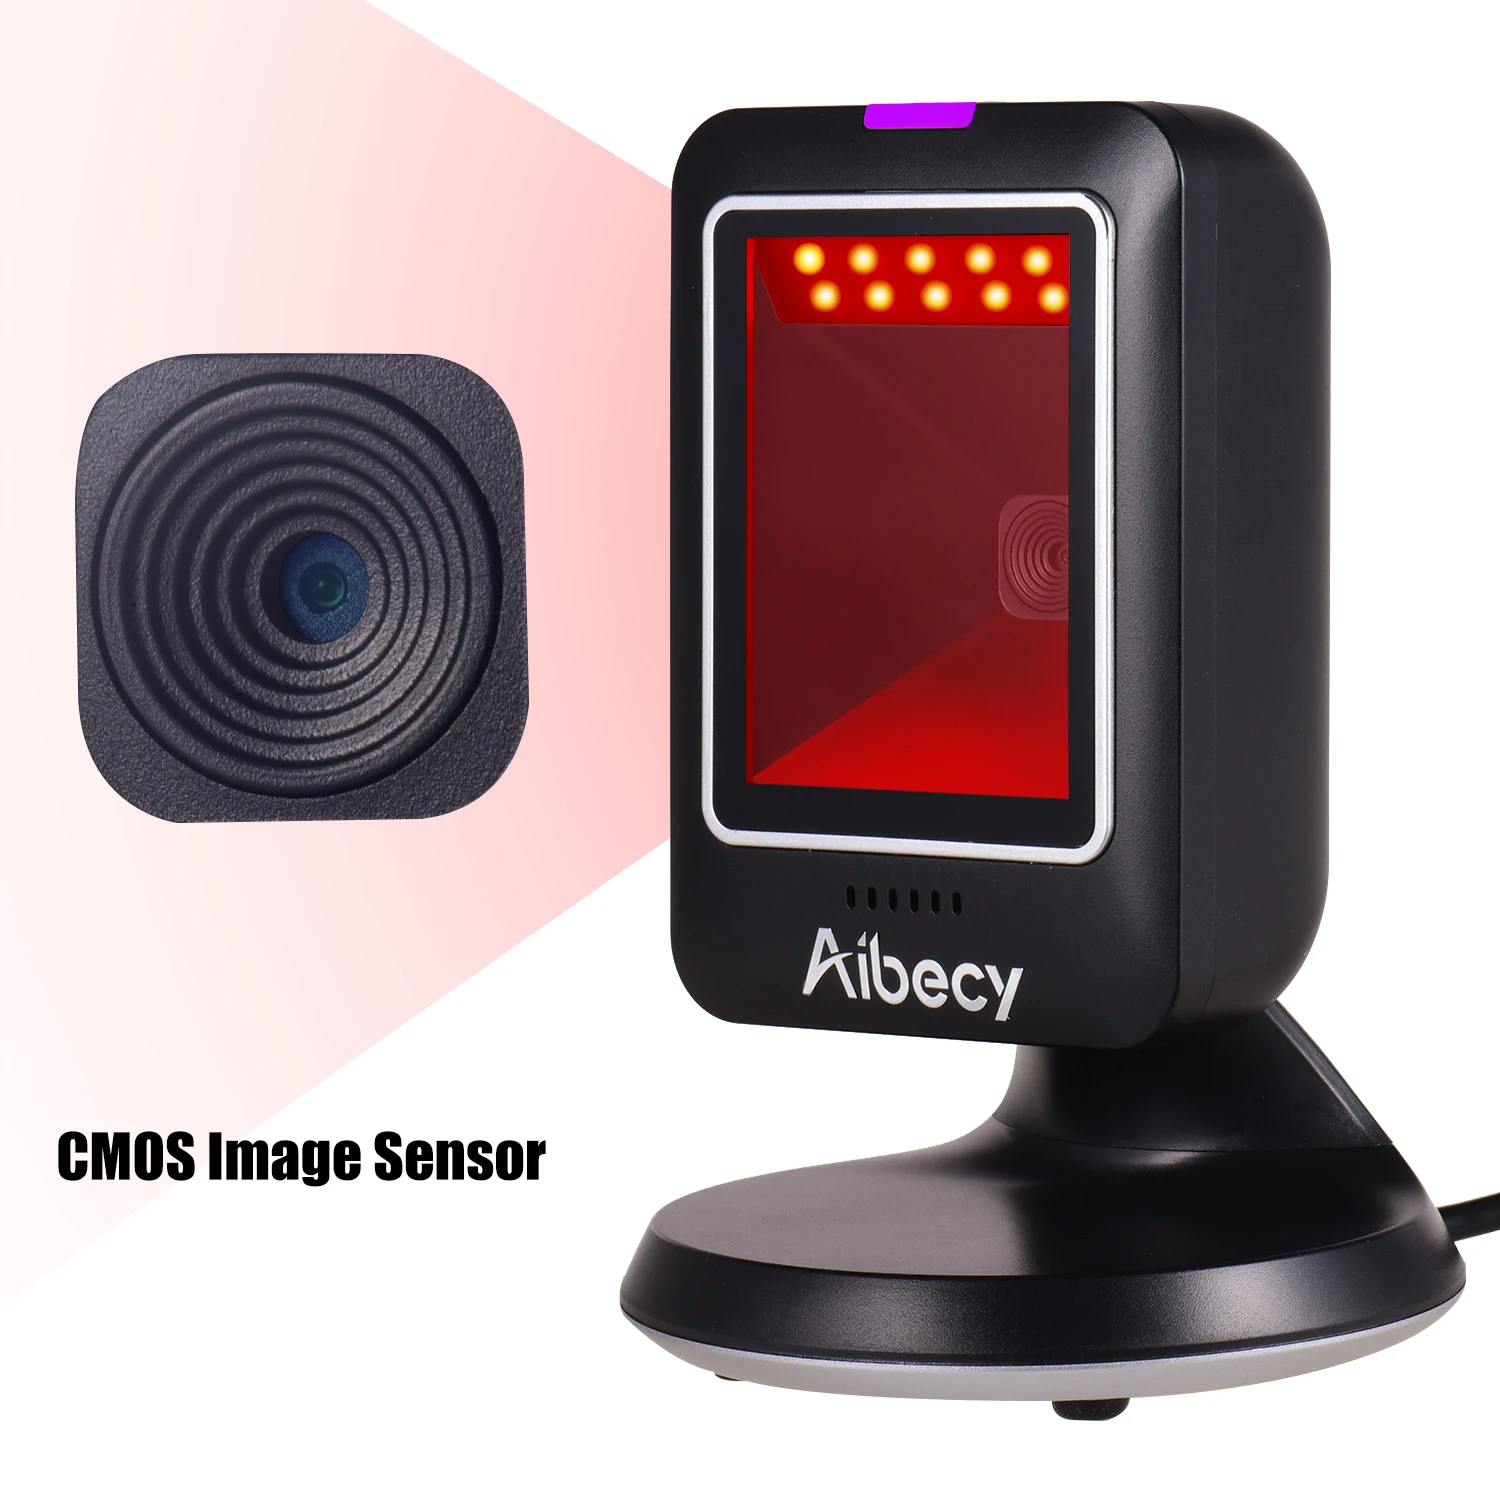 Aibecy Handheld USB Wired CMOS Image Barcode Scanner 1D 2D QR Bar Code V9N0 